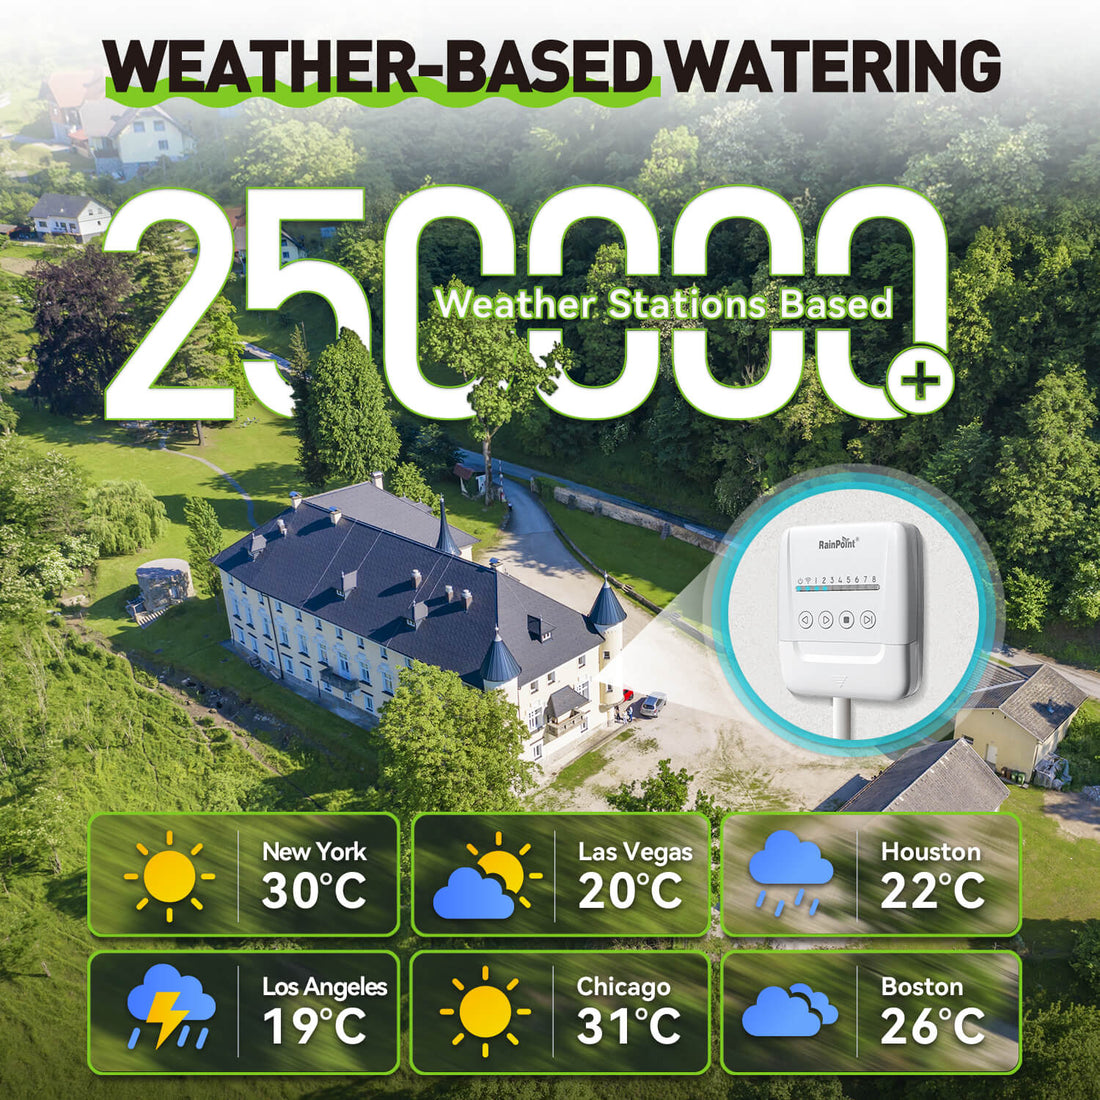 RainPoint 8 Zone Smart Sprinkler Controller, Water Timer Controller for Garden Yard